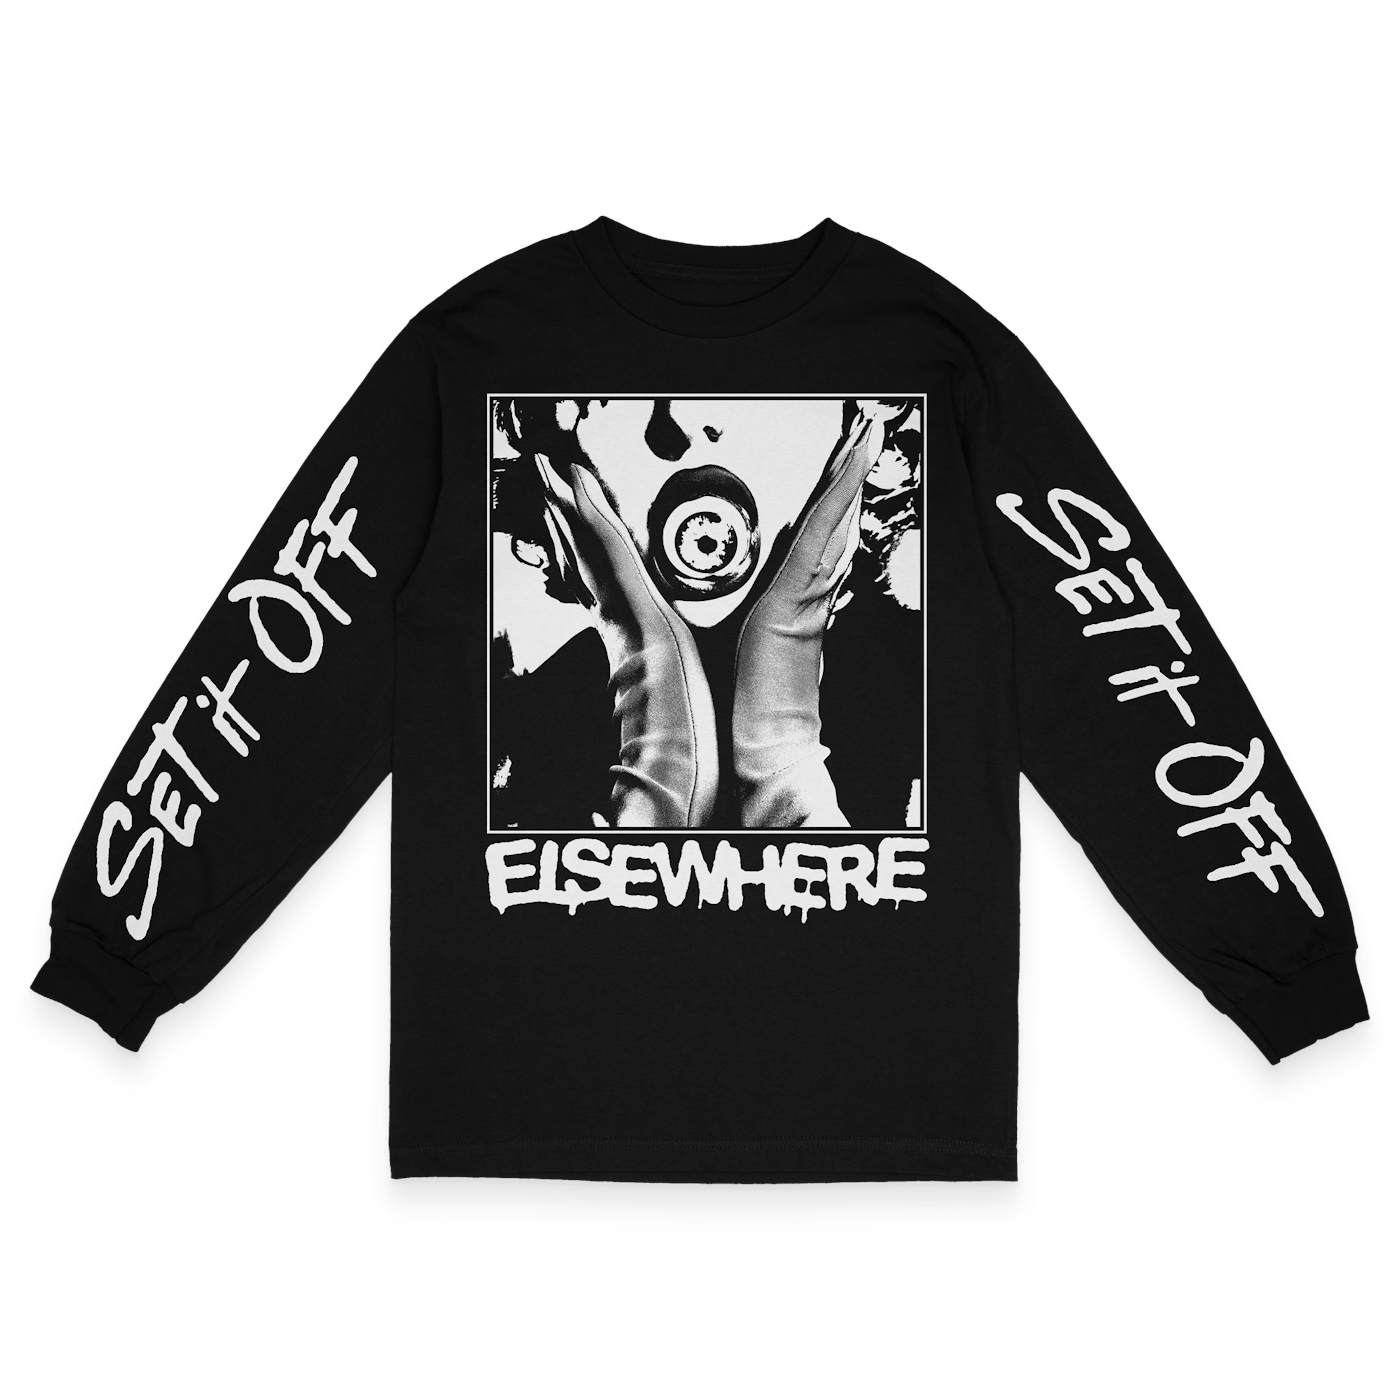 Set It Off "Elsewhere Negative" Long Sleeve T-Shirt